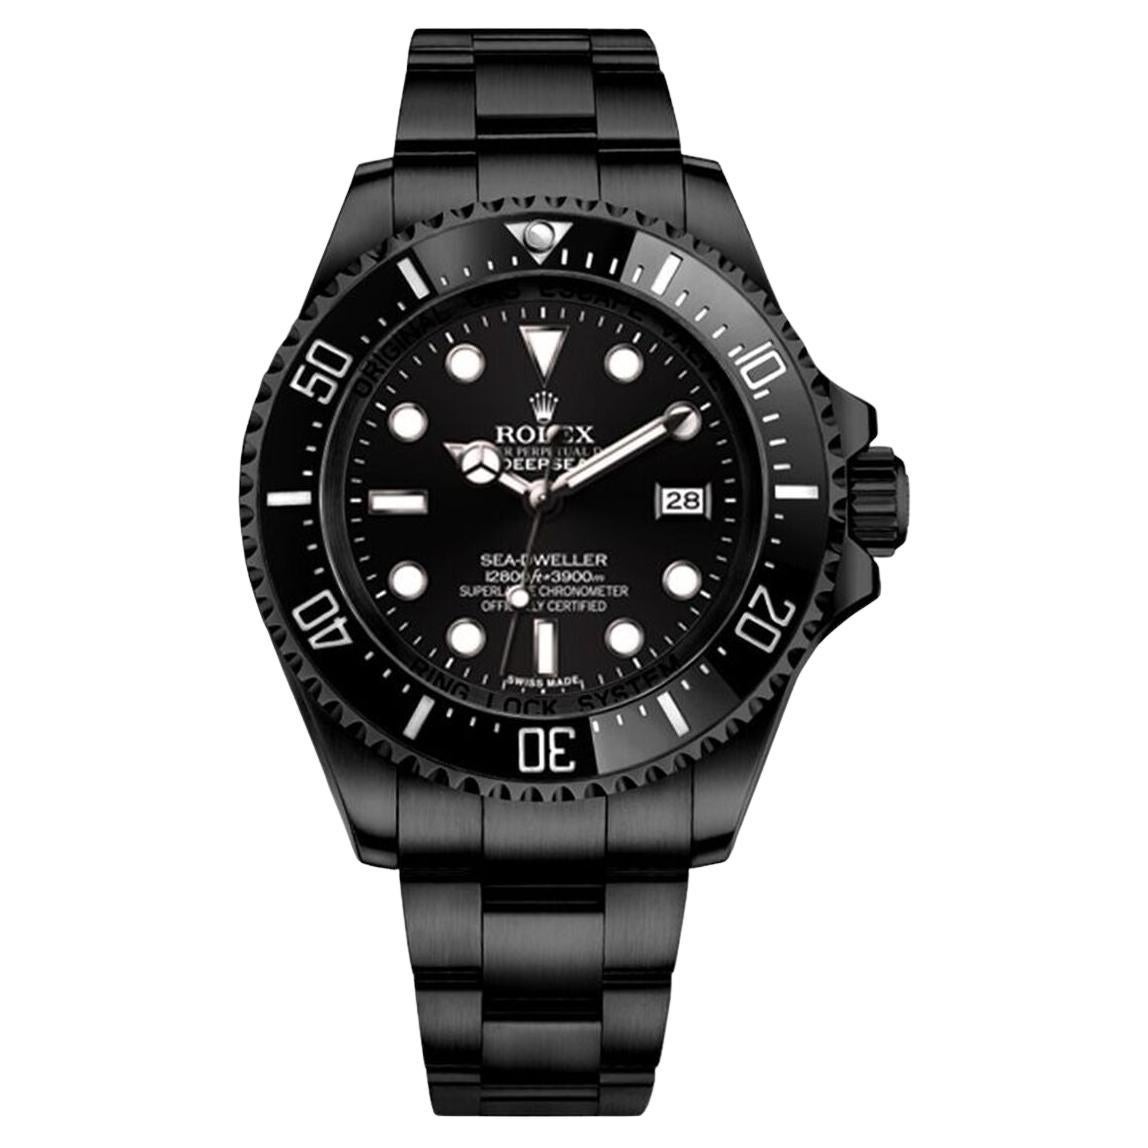 Rolex Sea-Dweller Deepsea PVD/DLC Uhr aus beschichtetem Edelstahl 116660 im Angebot